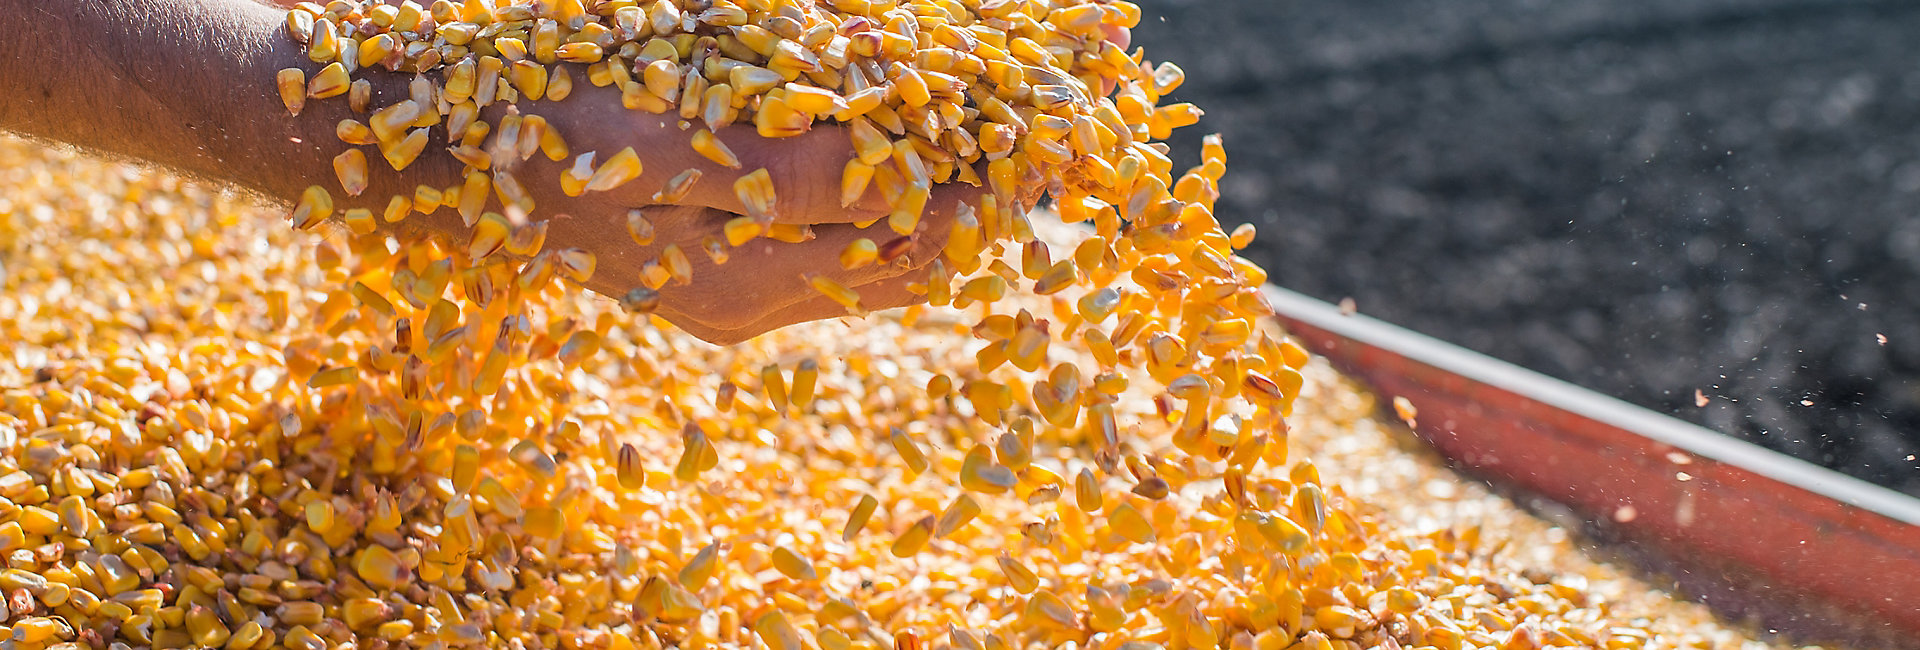 Corn seed in hand of farmer